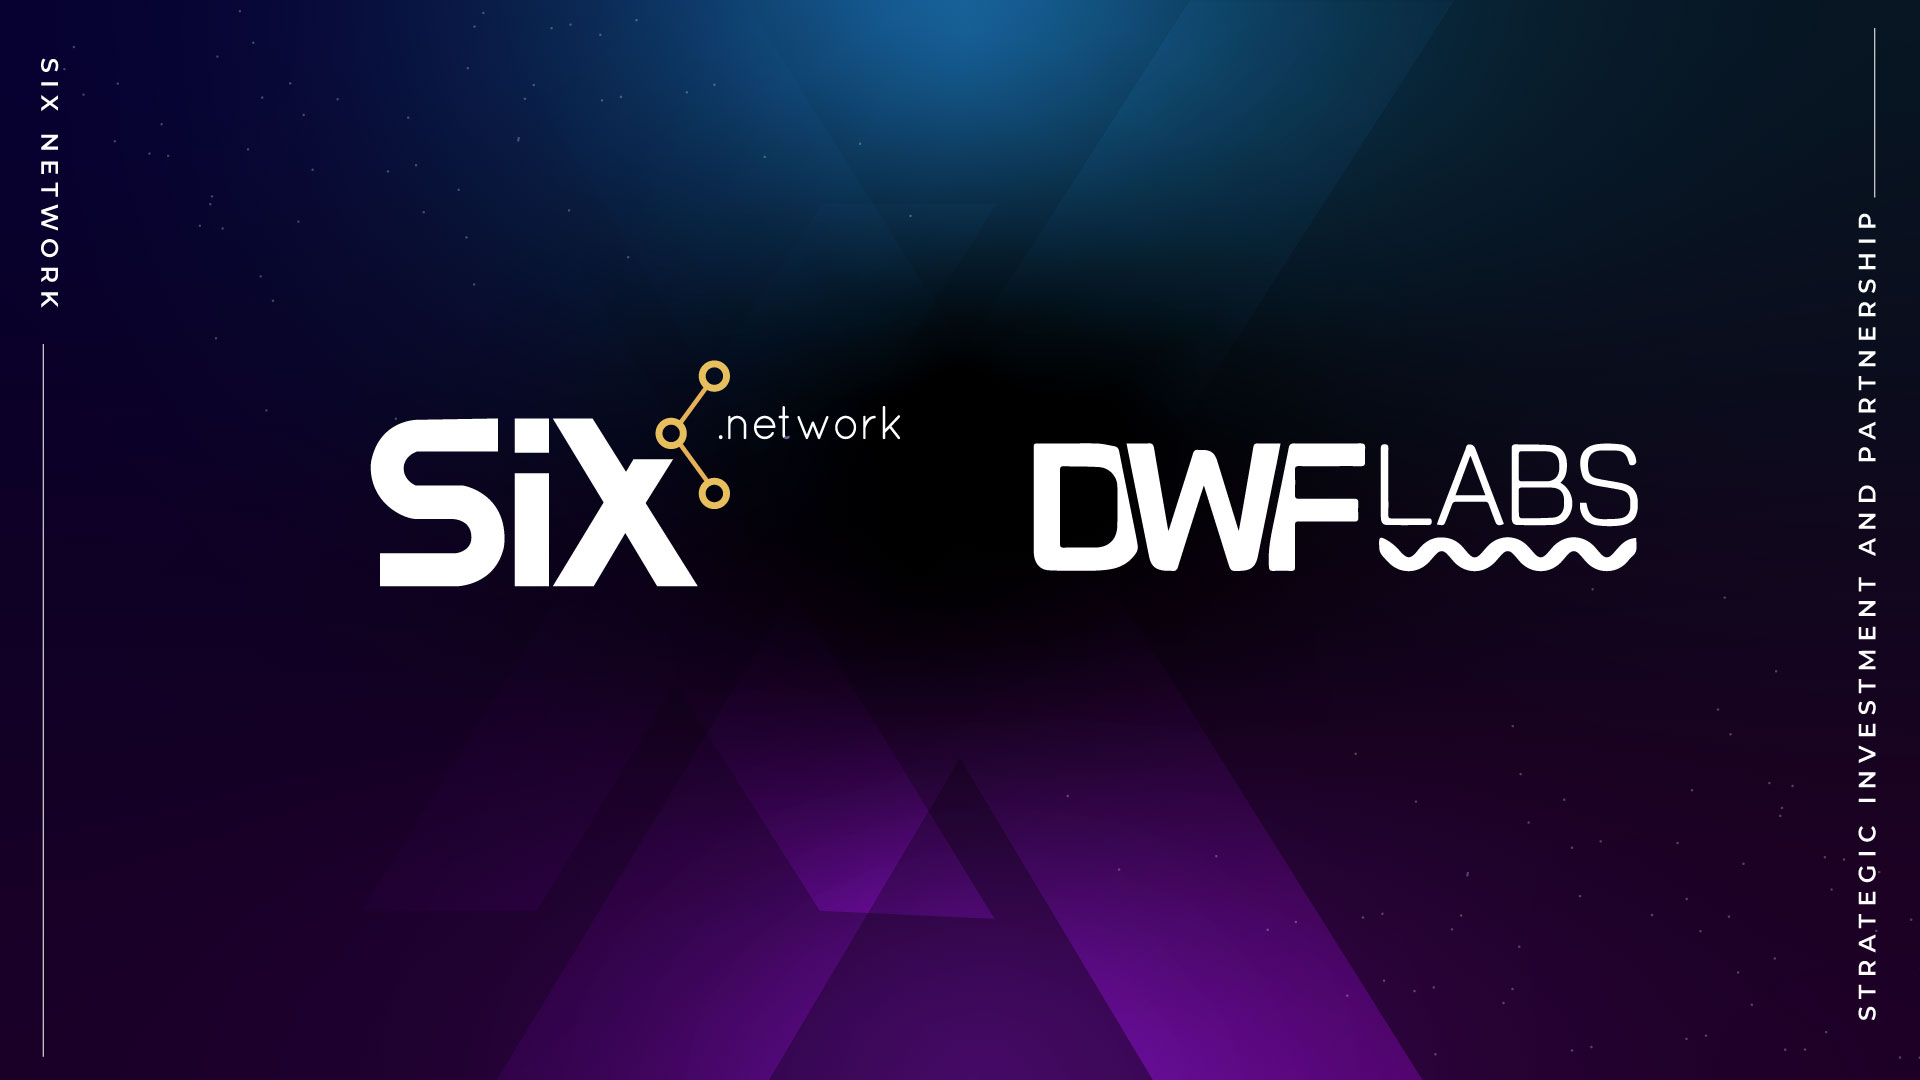 SIX Network ได้รับการลงทุนเชิงกลยุทธ์และเป็นพาร์ทเนอร์กับ DWF Labs บริษัทด้านการลงทุน Web3 ระดับโลก